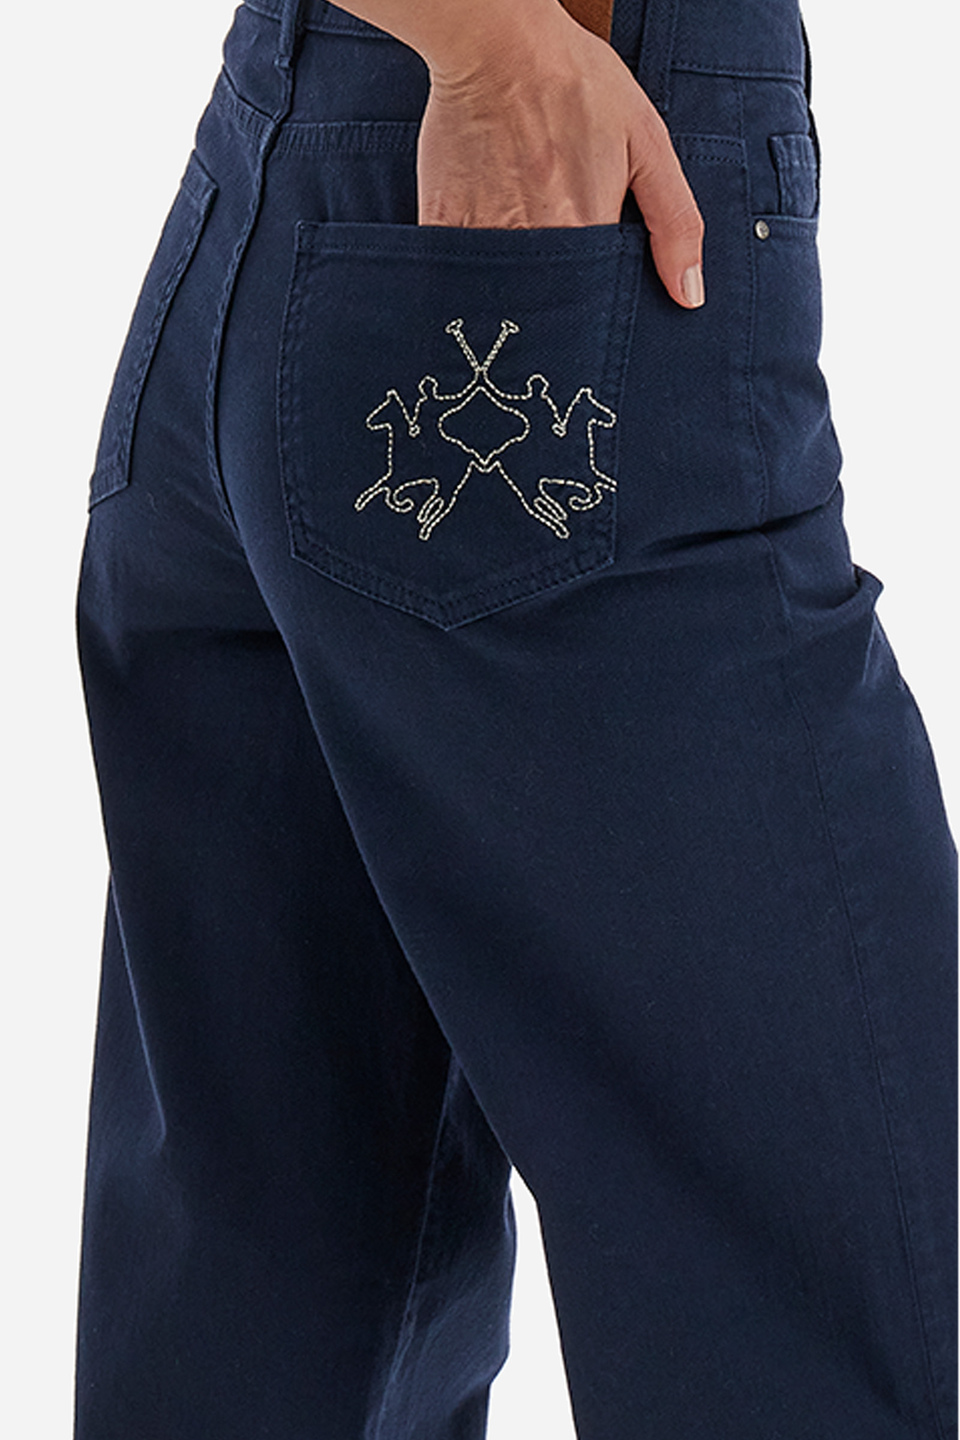 Women's 5-pocket jeans trousers in solid color Spring Weekend - Villard | La Martina - Official Online Shop